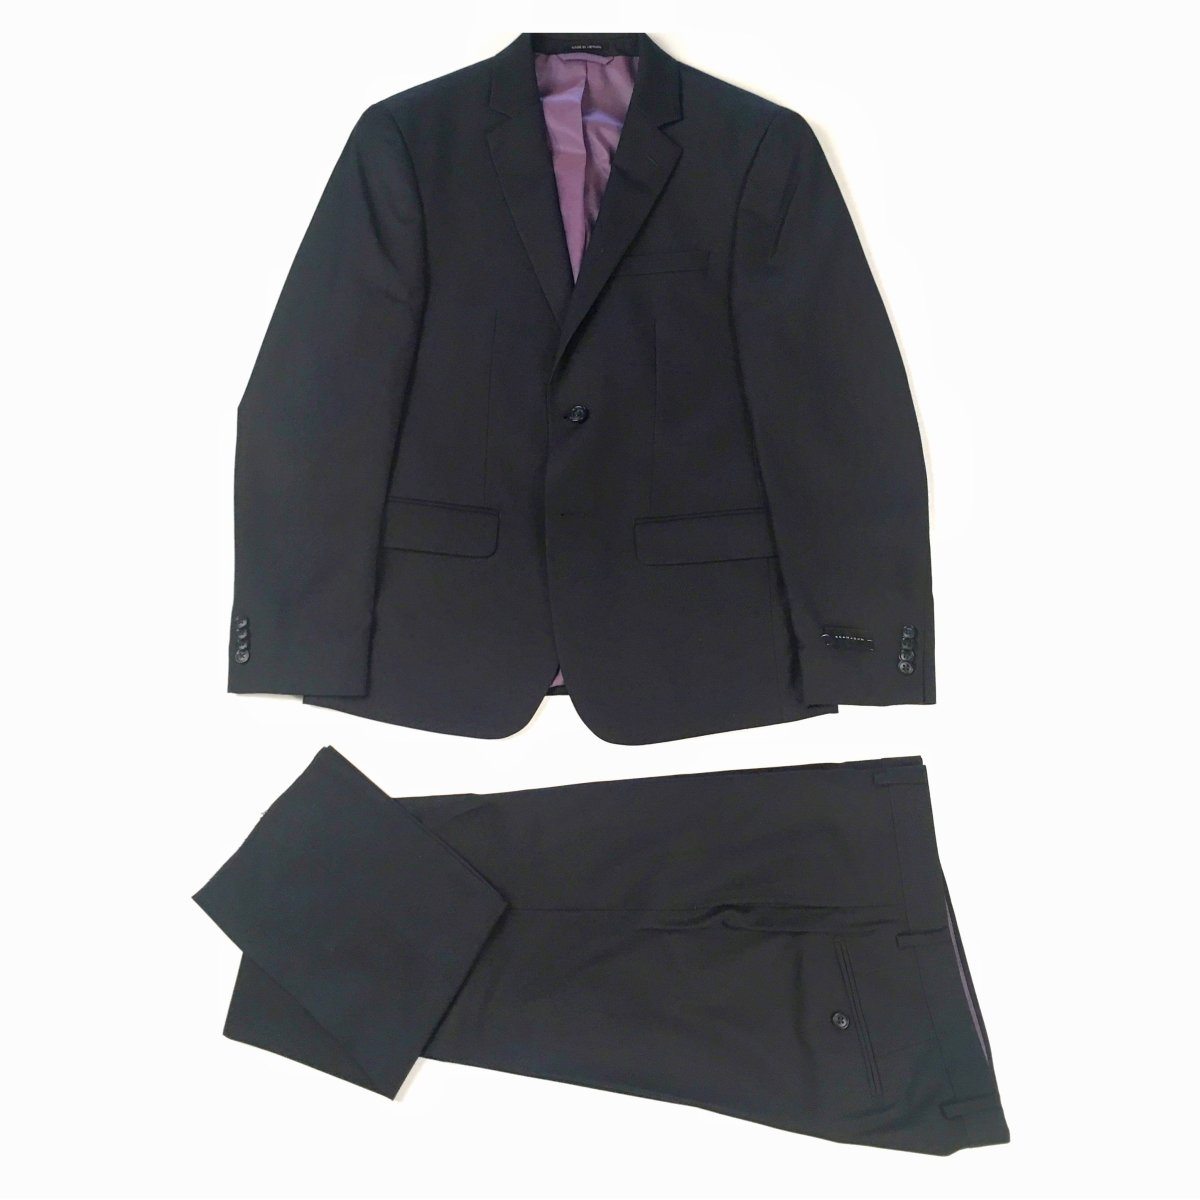 Sean John Mens Ultra-Slim Plain Navy Suit Suits (Men) Sean John 